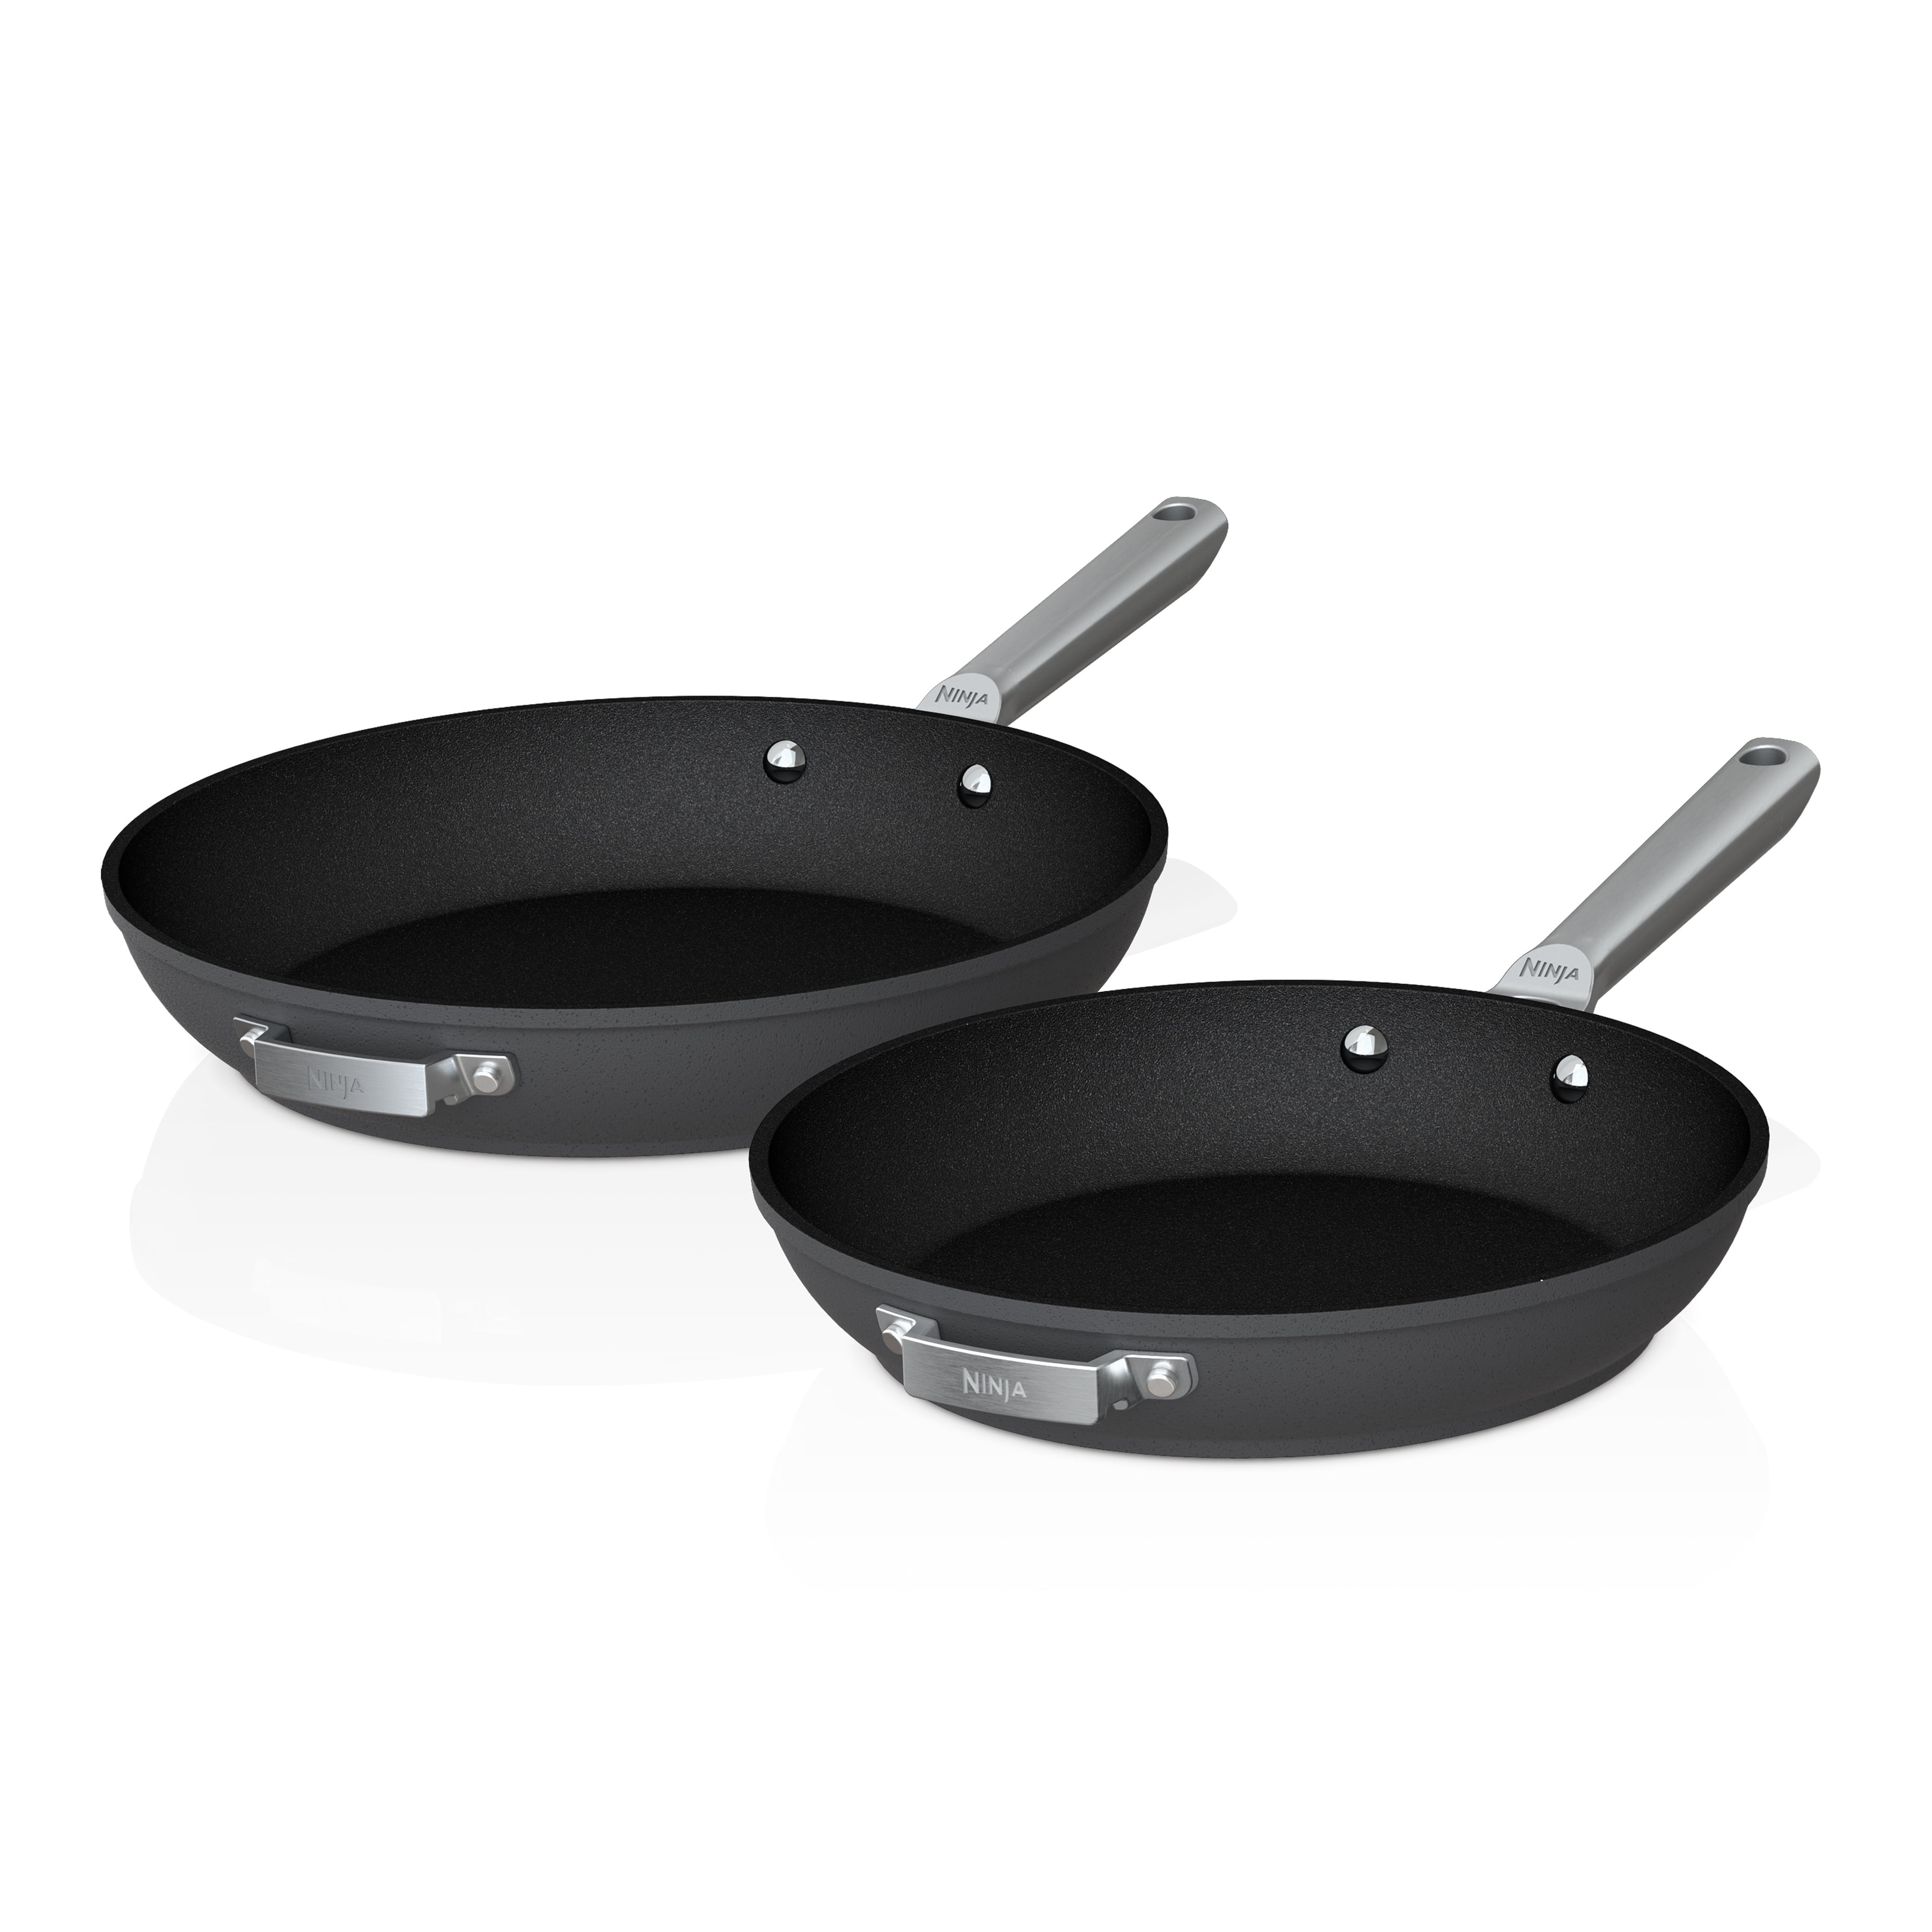 2 brand new Ninja ceramic pans - household items - by owner